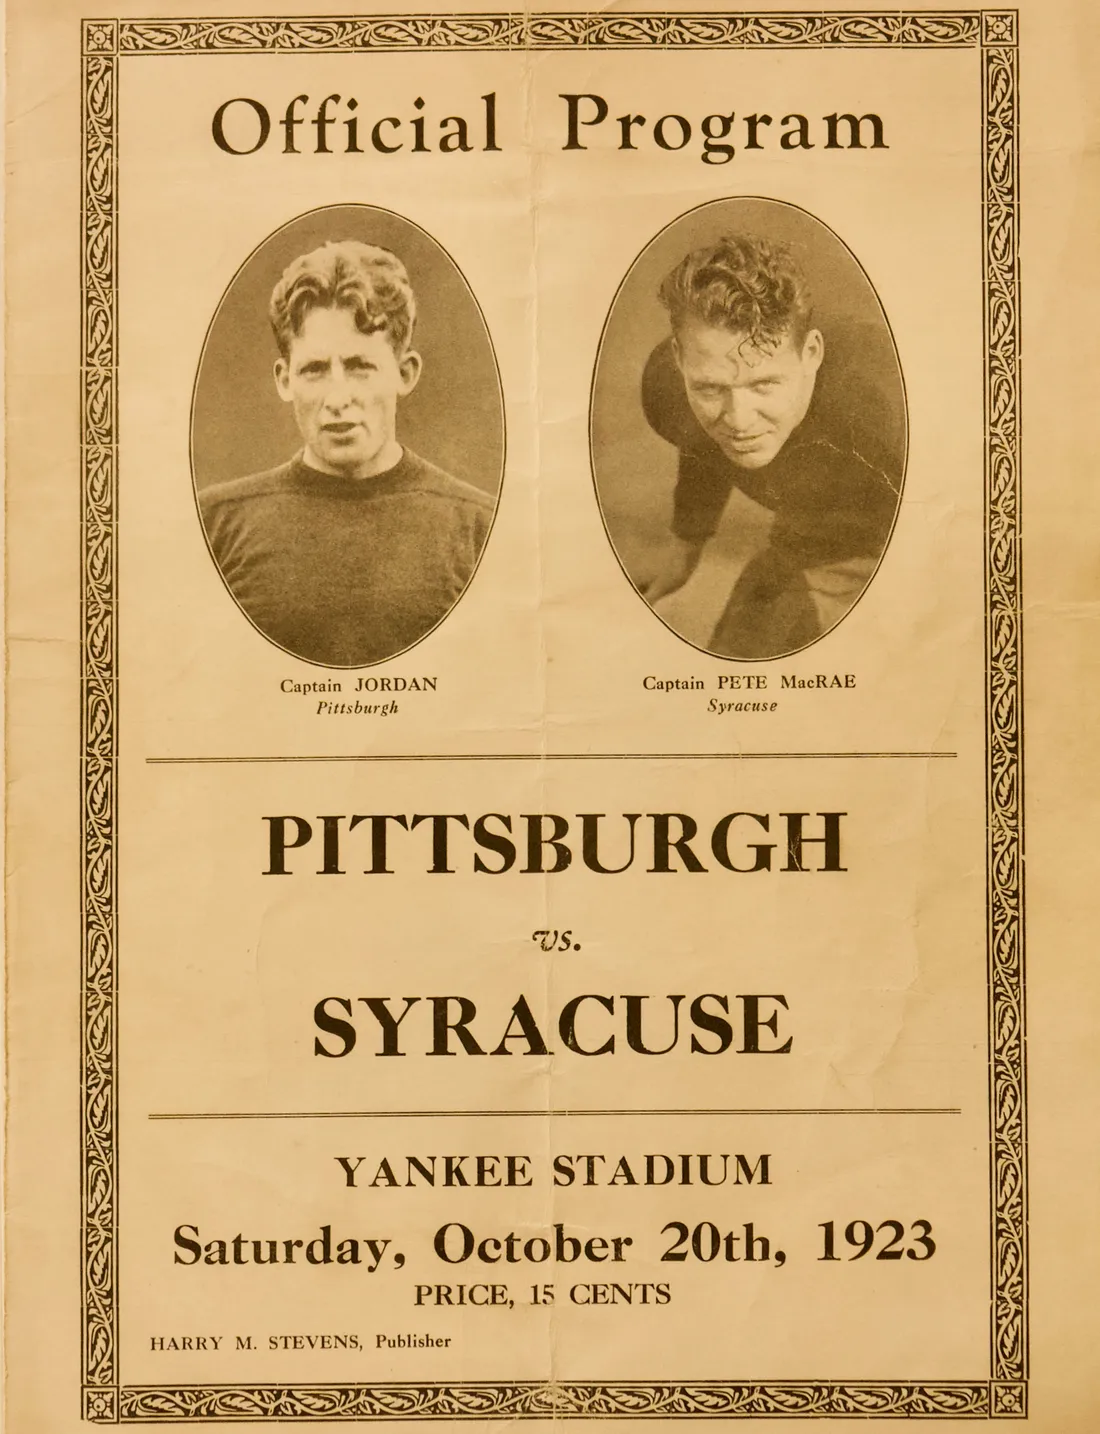 Syracuse and Pitt game program.